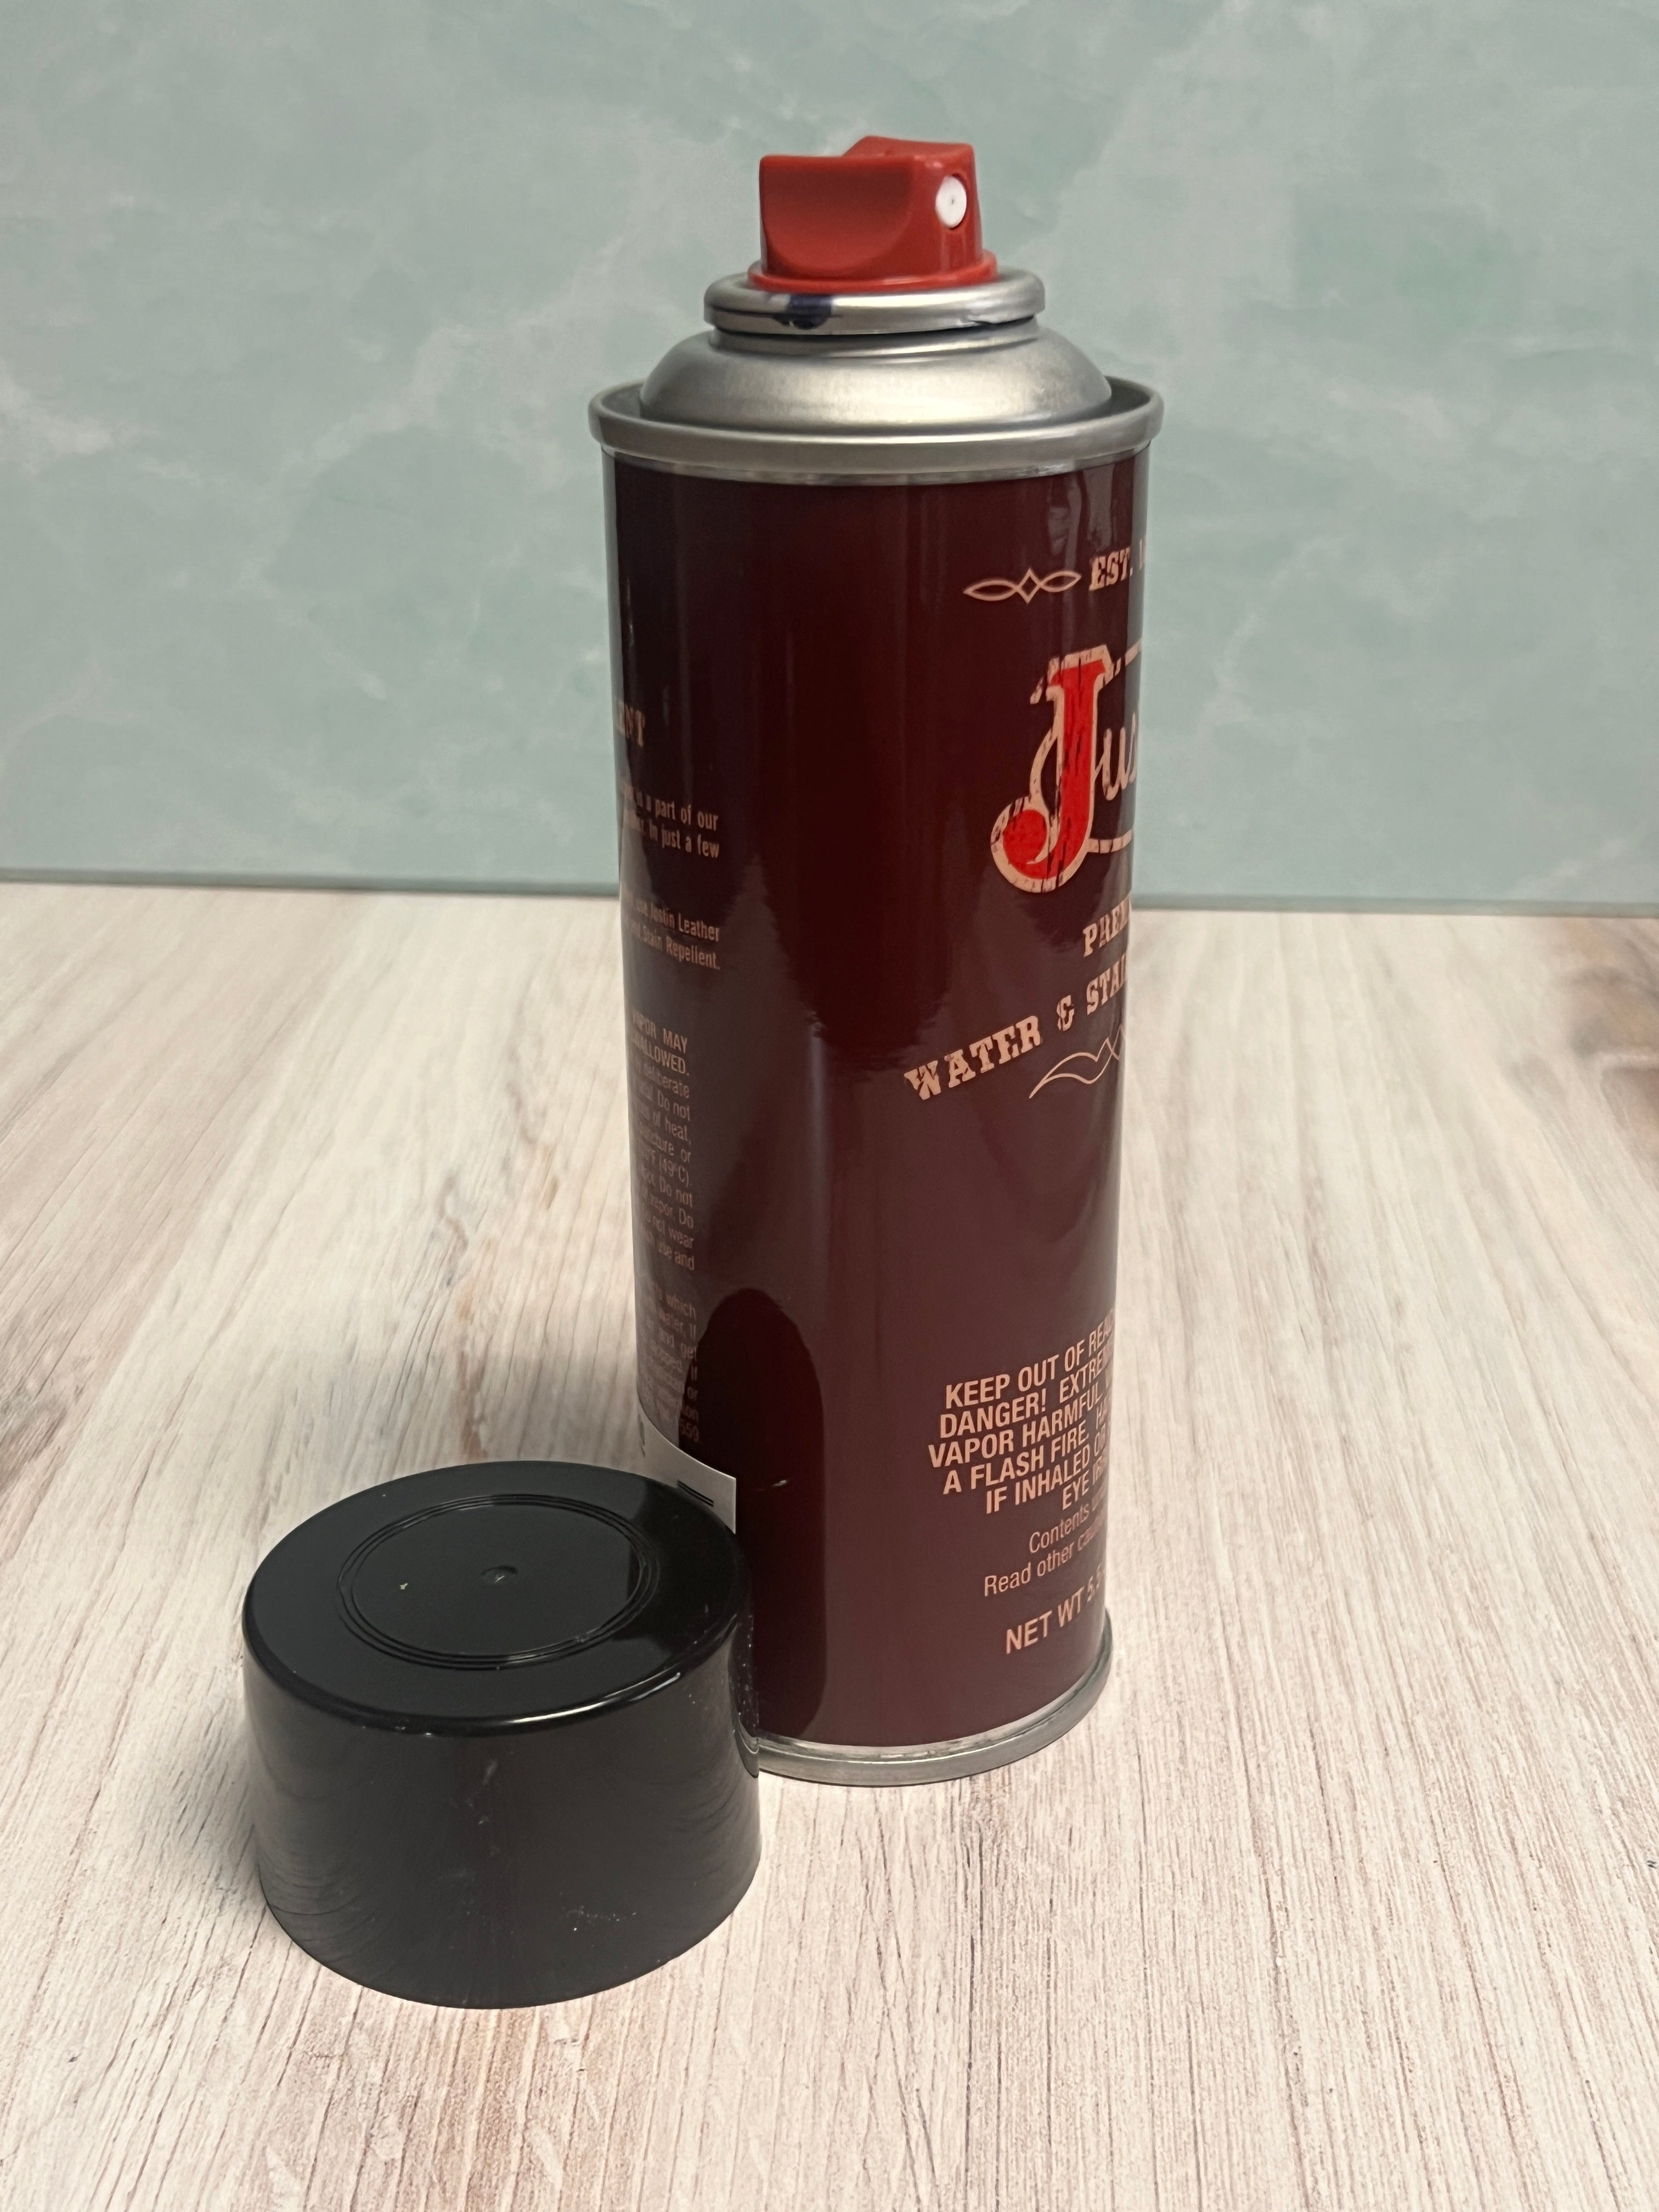 Justin Aerosol Water & Stain Repellent 21004